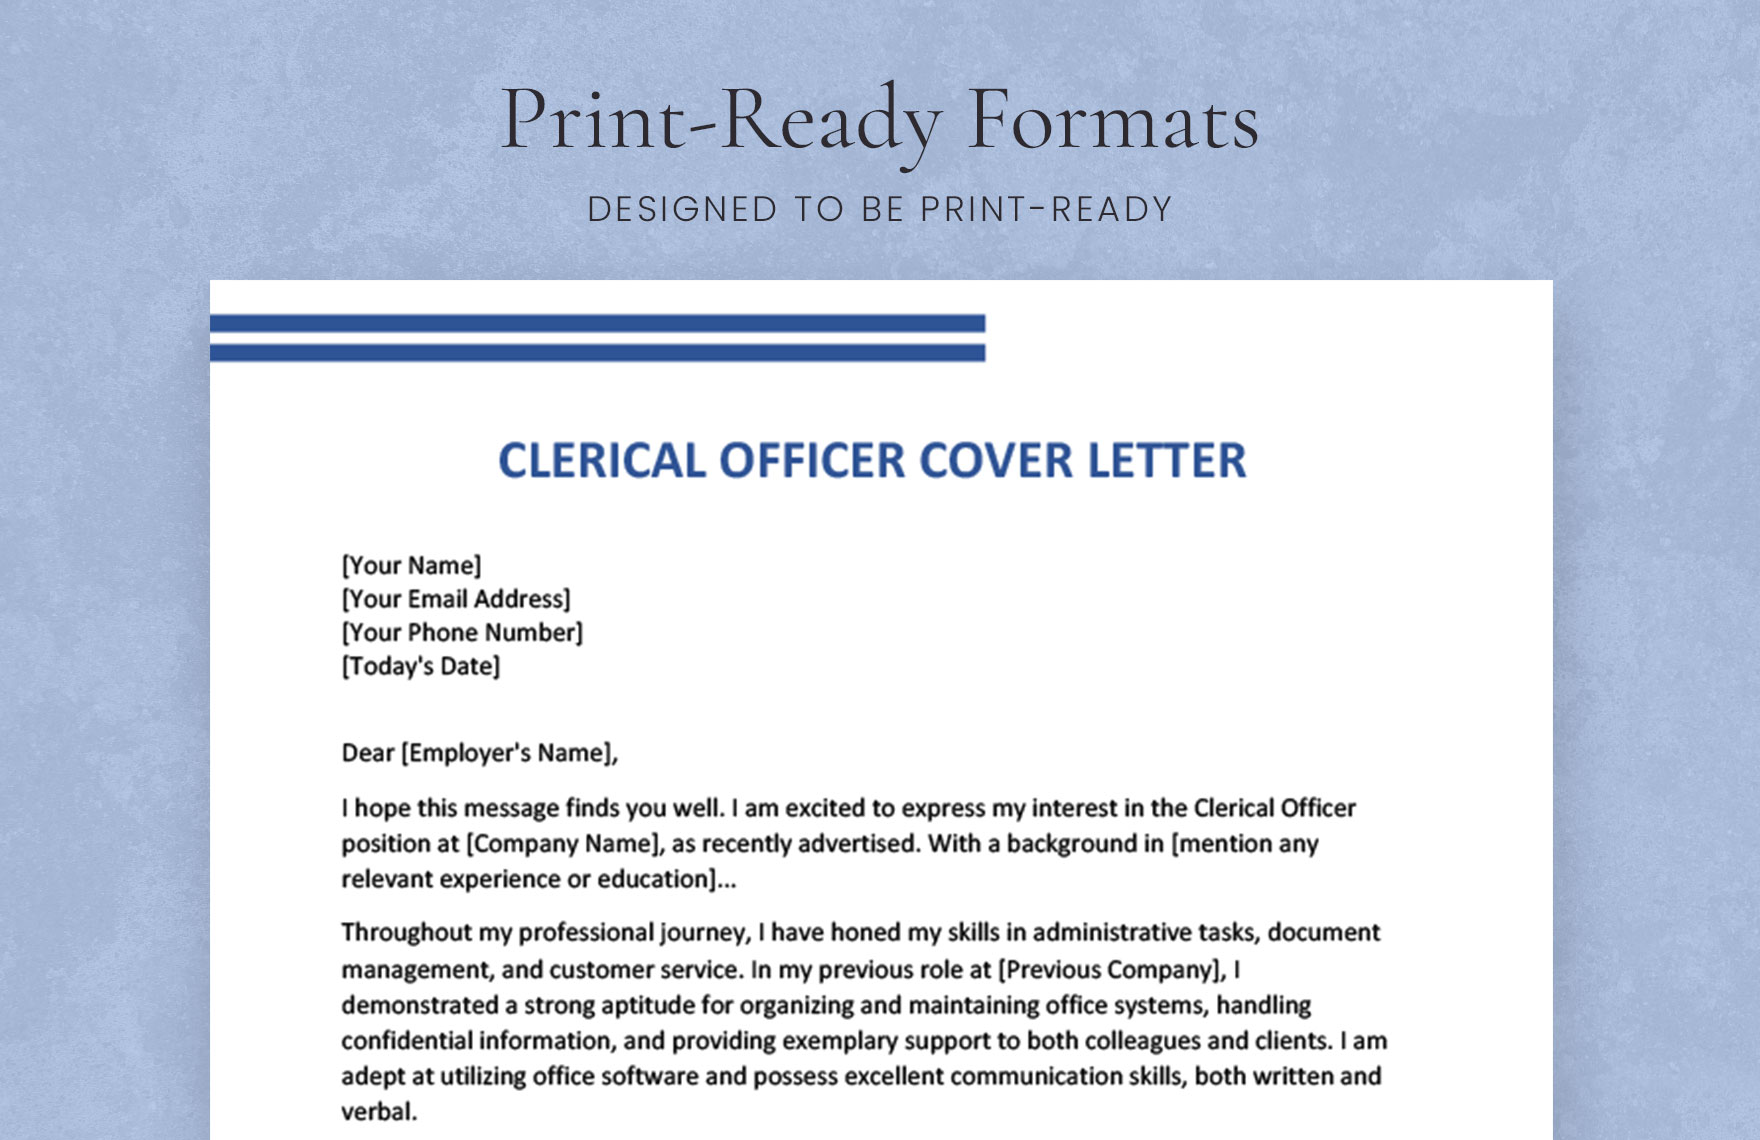 Clerical Officer Cover Letter